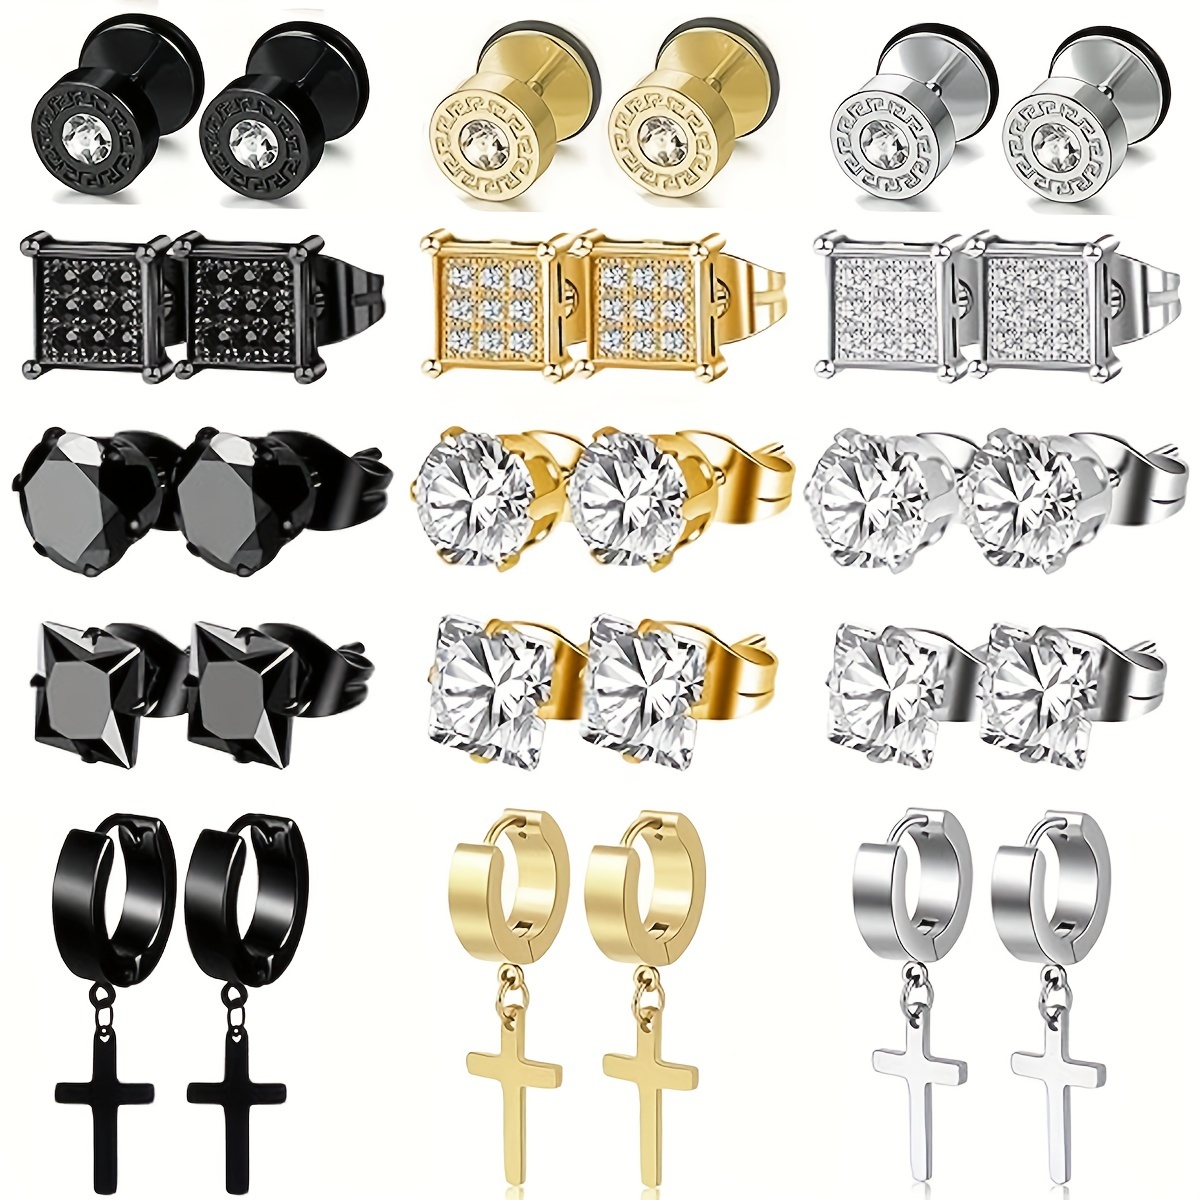 

15 Pairs Stainless Steel Earrings For Men, Cross Dangle Hinged Earrings, Cubic Zirconia Stud Earrings For Men, Ear Piercing Jewelry